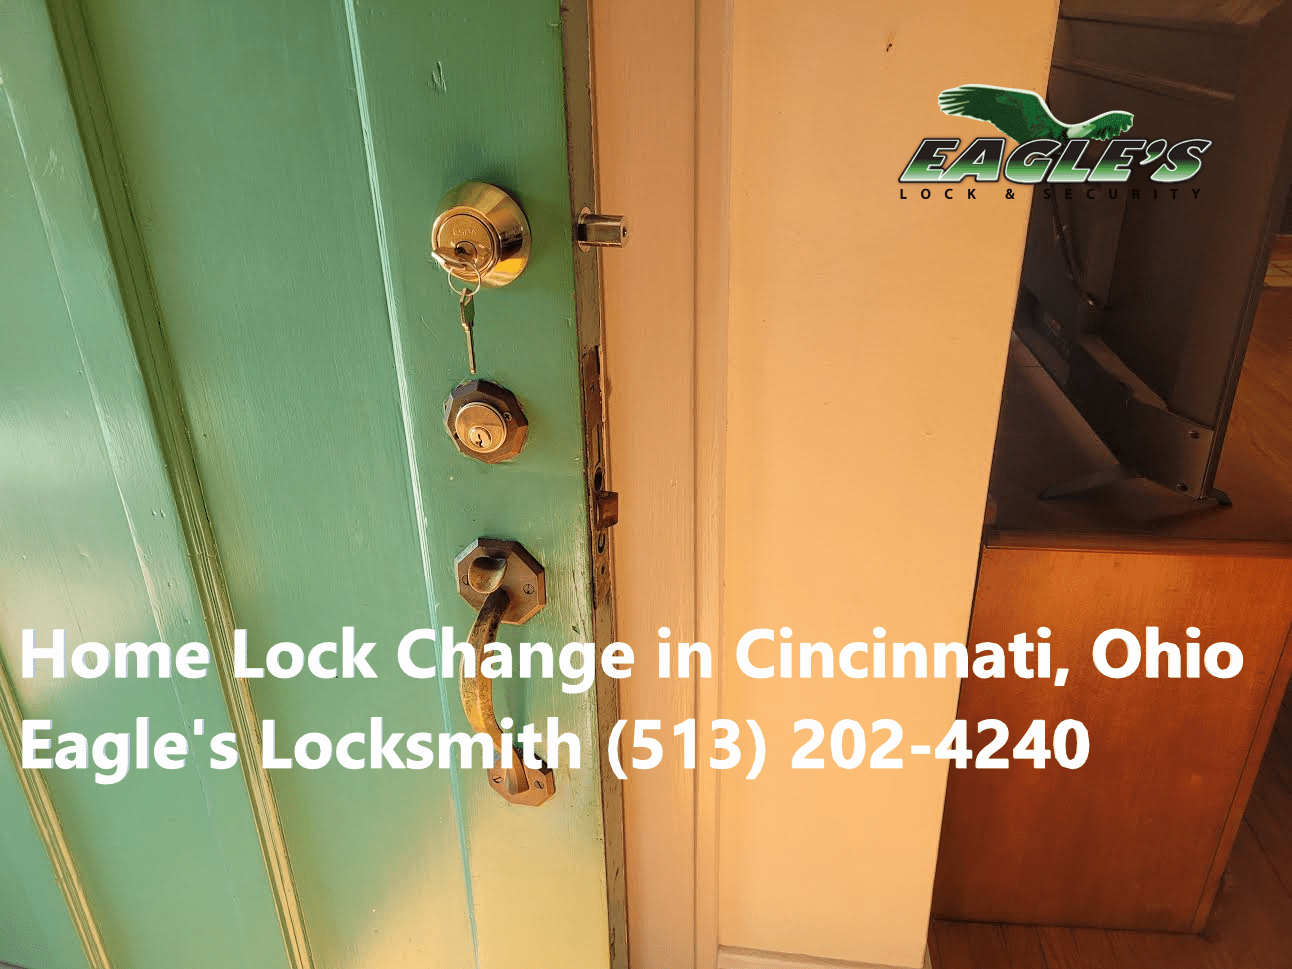 Home Lock Change in Cincinnati, Ohio